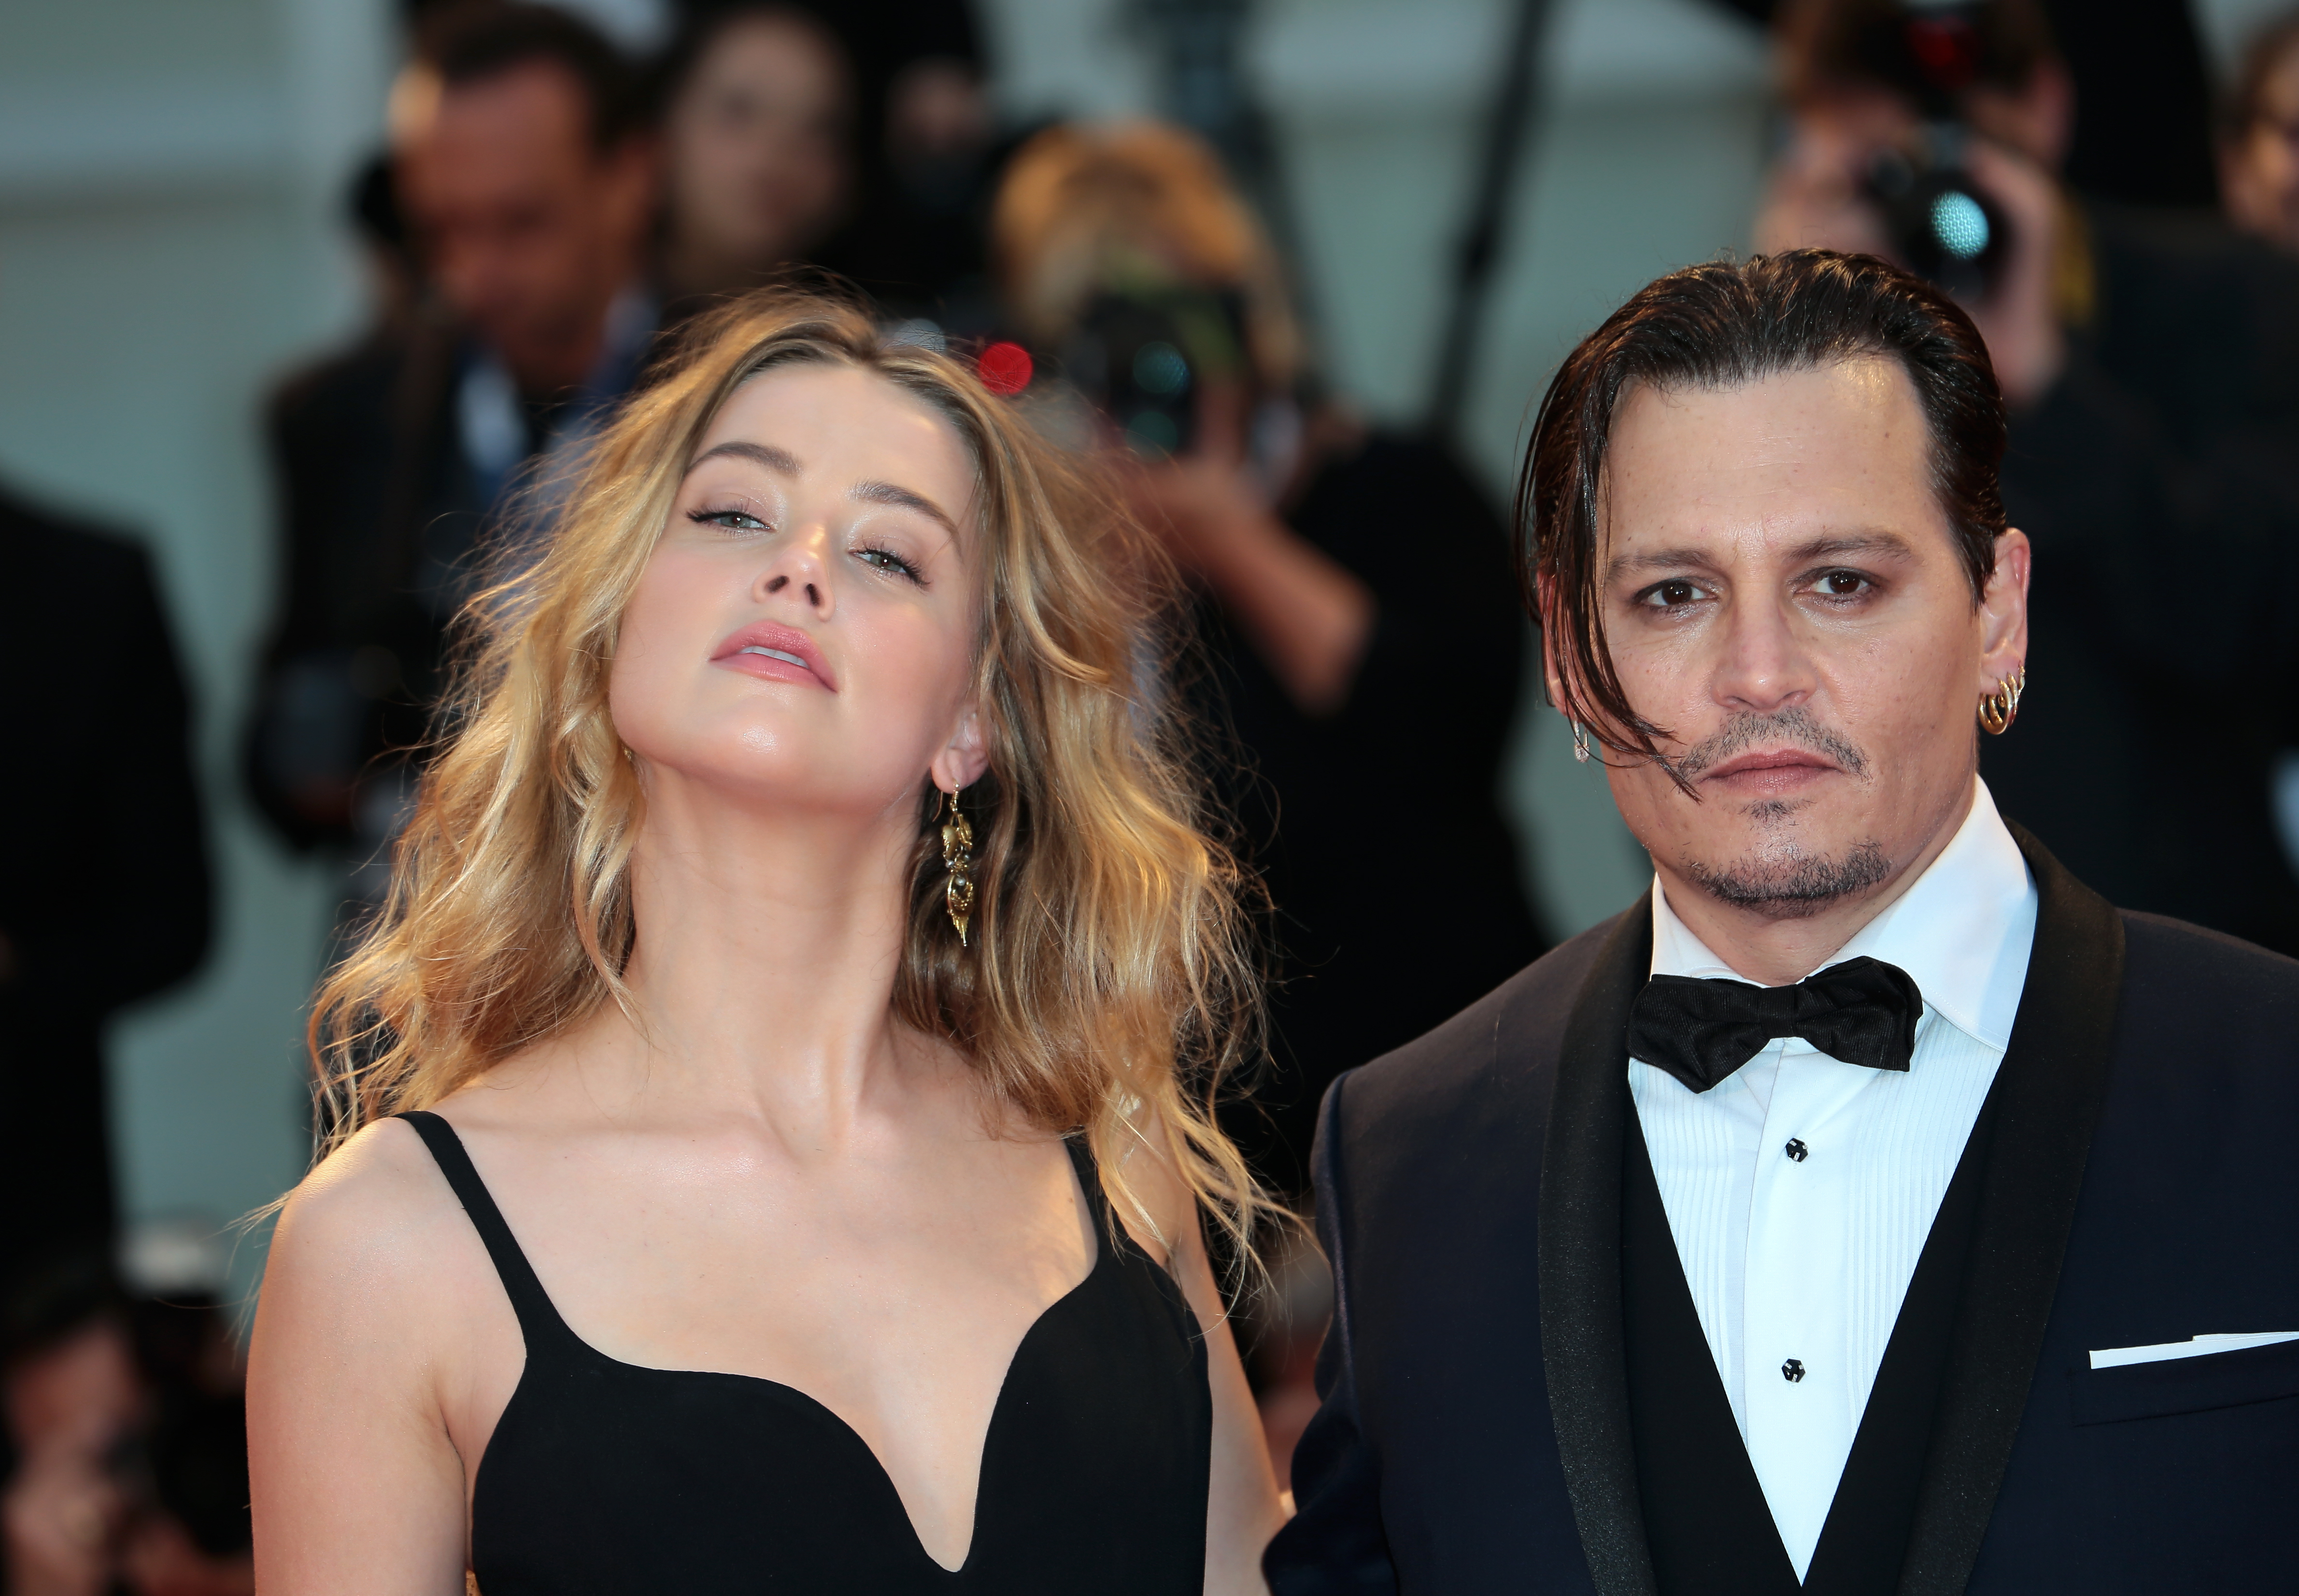 Celebrity Amber Heard Makes $1 Million Settlement Payment for Defamation Suit to Celebrity Johnny Depp, Web Fans Show Support